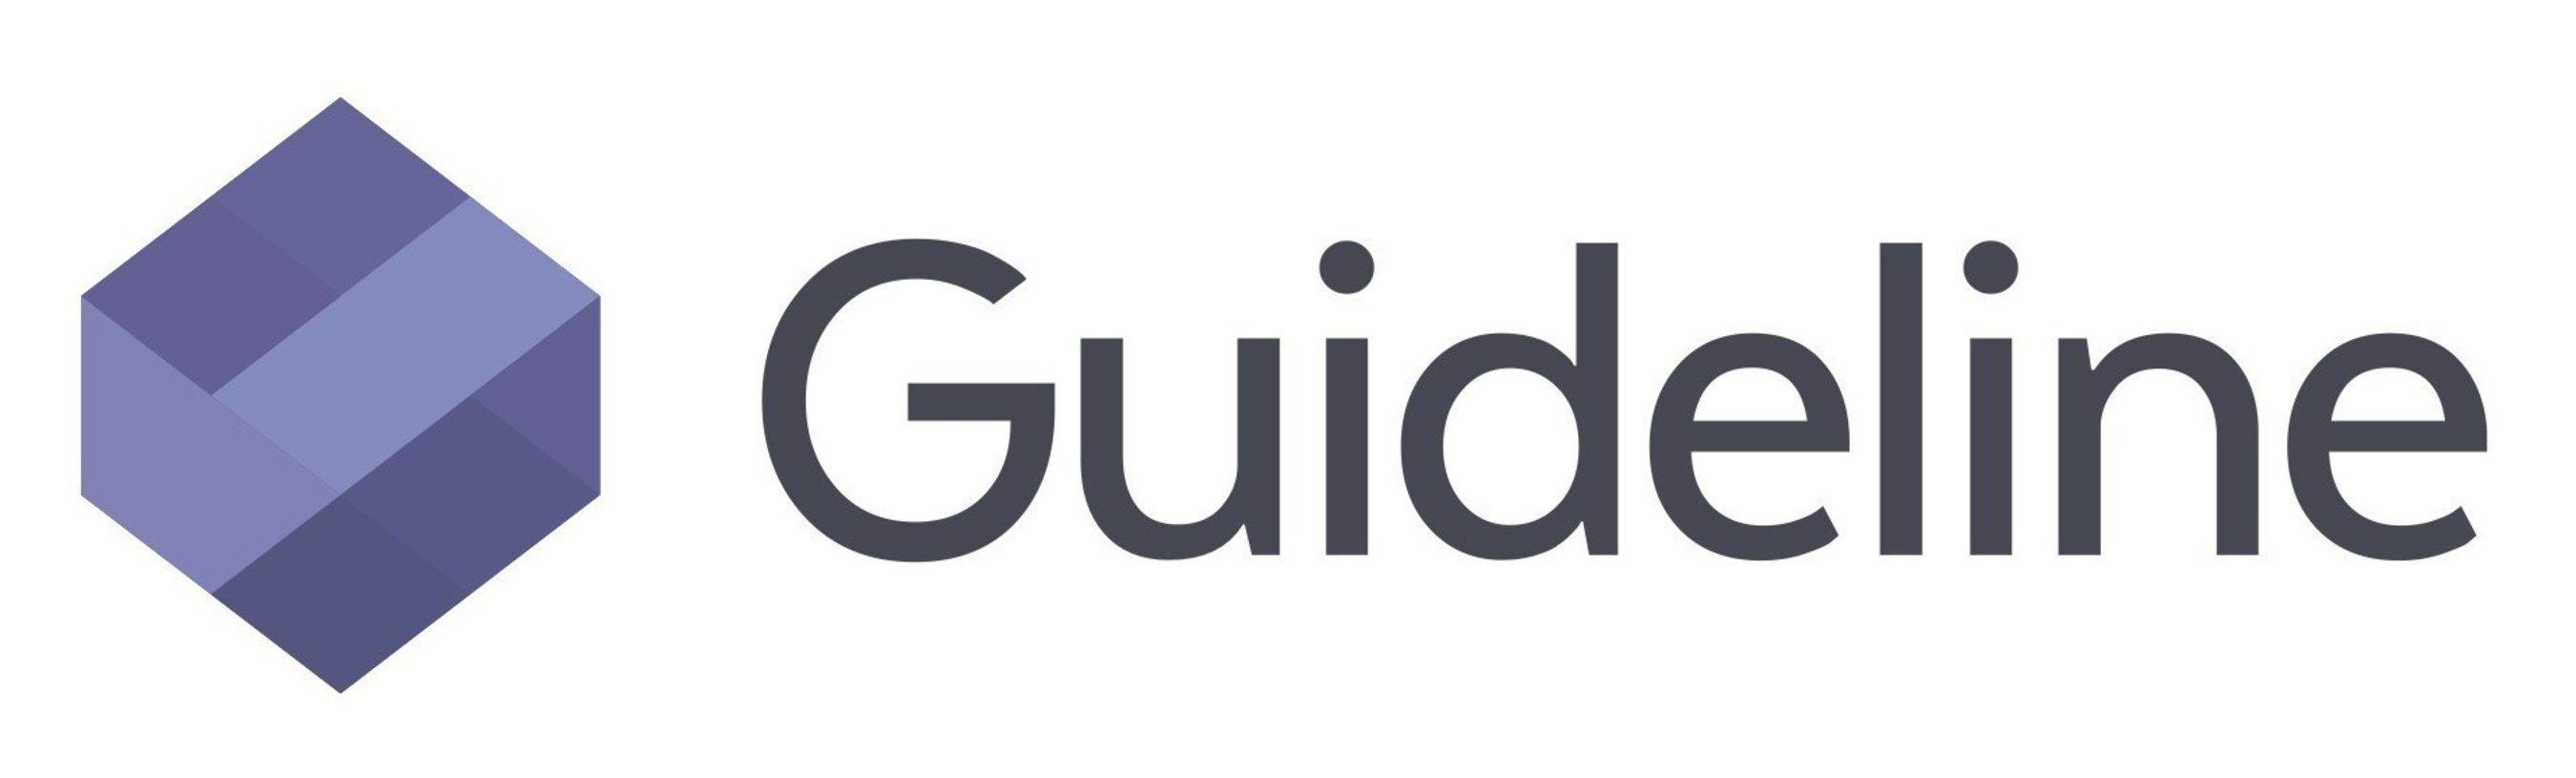 401k Logo - Guideline Raises $7 Million Series A Led By Propel Venture Partners